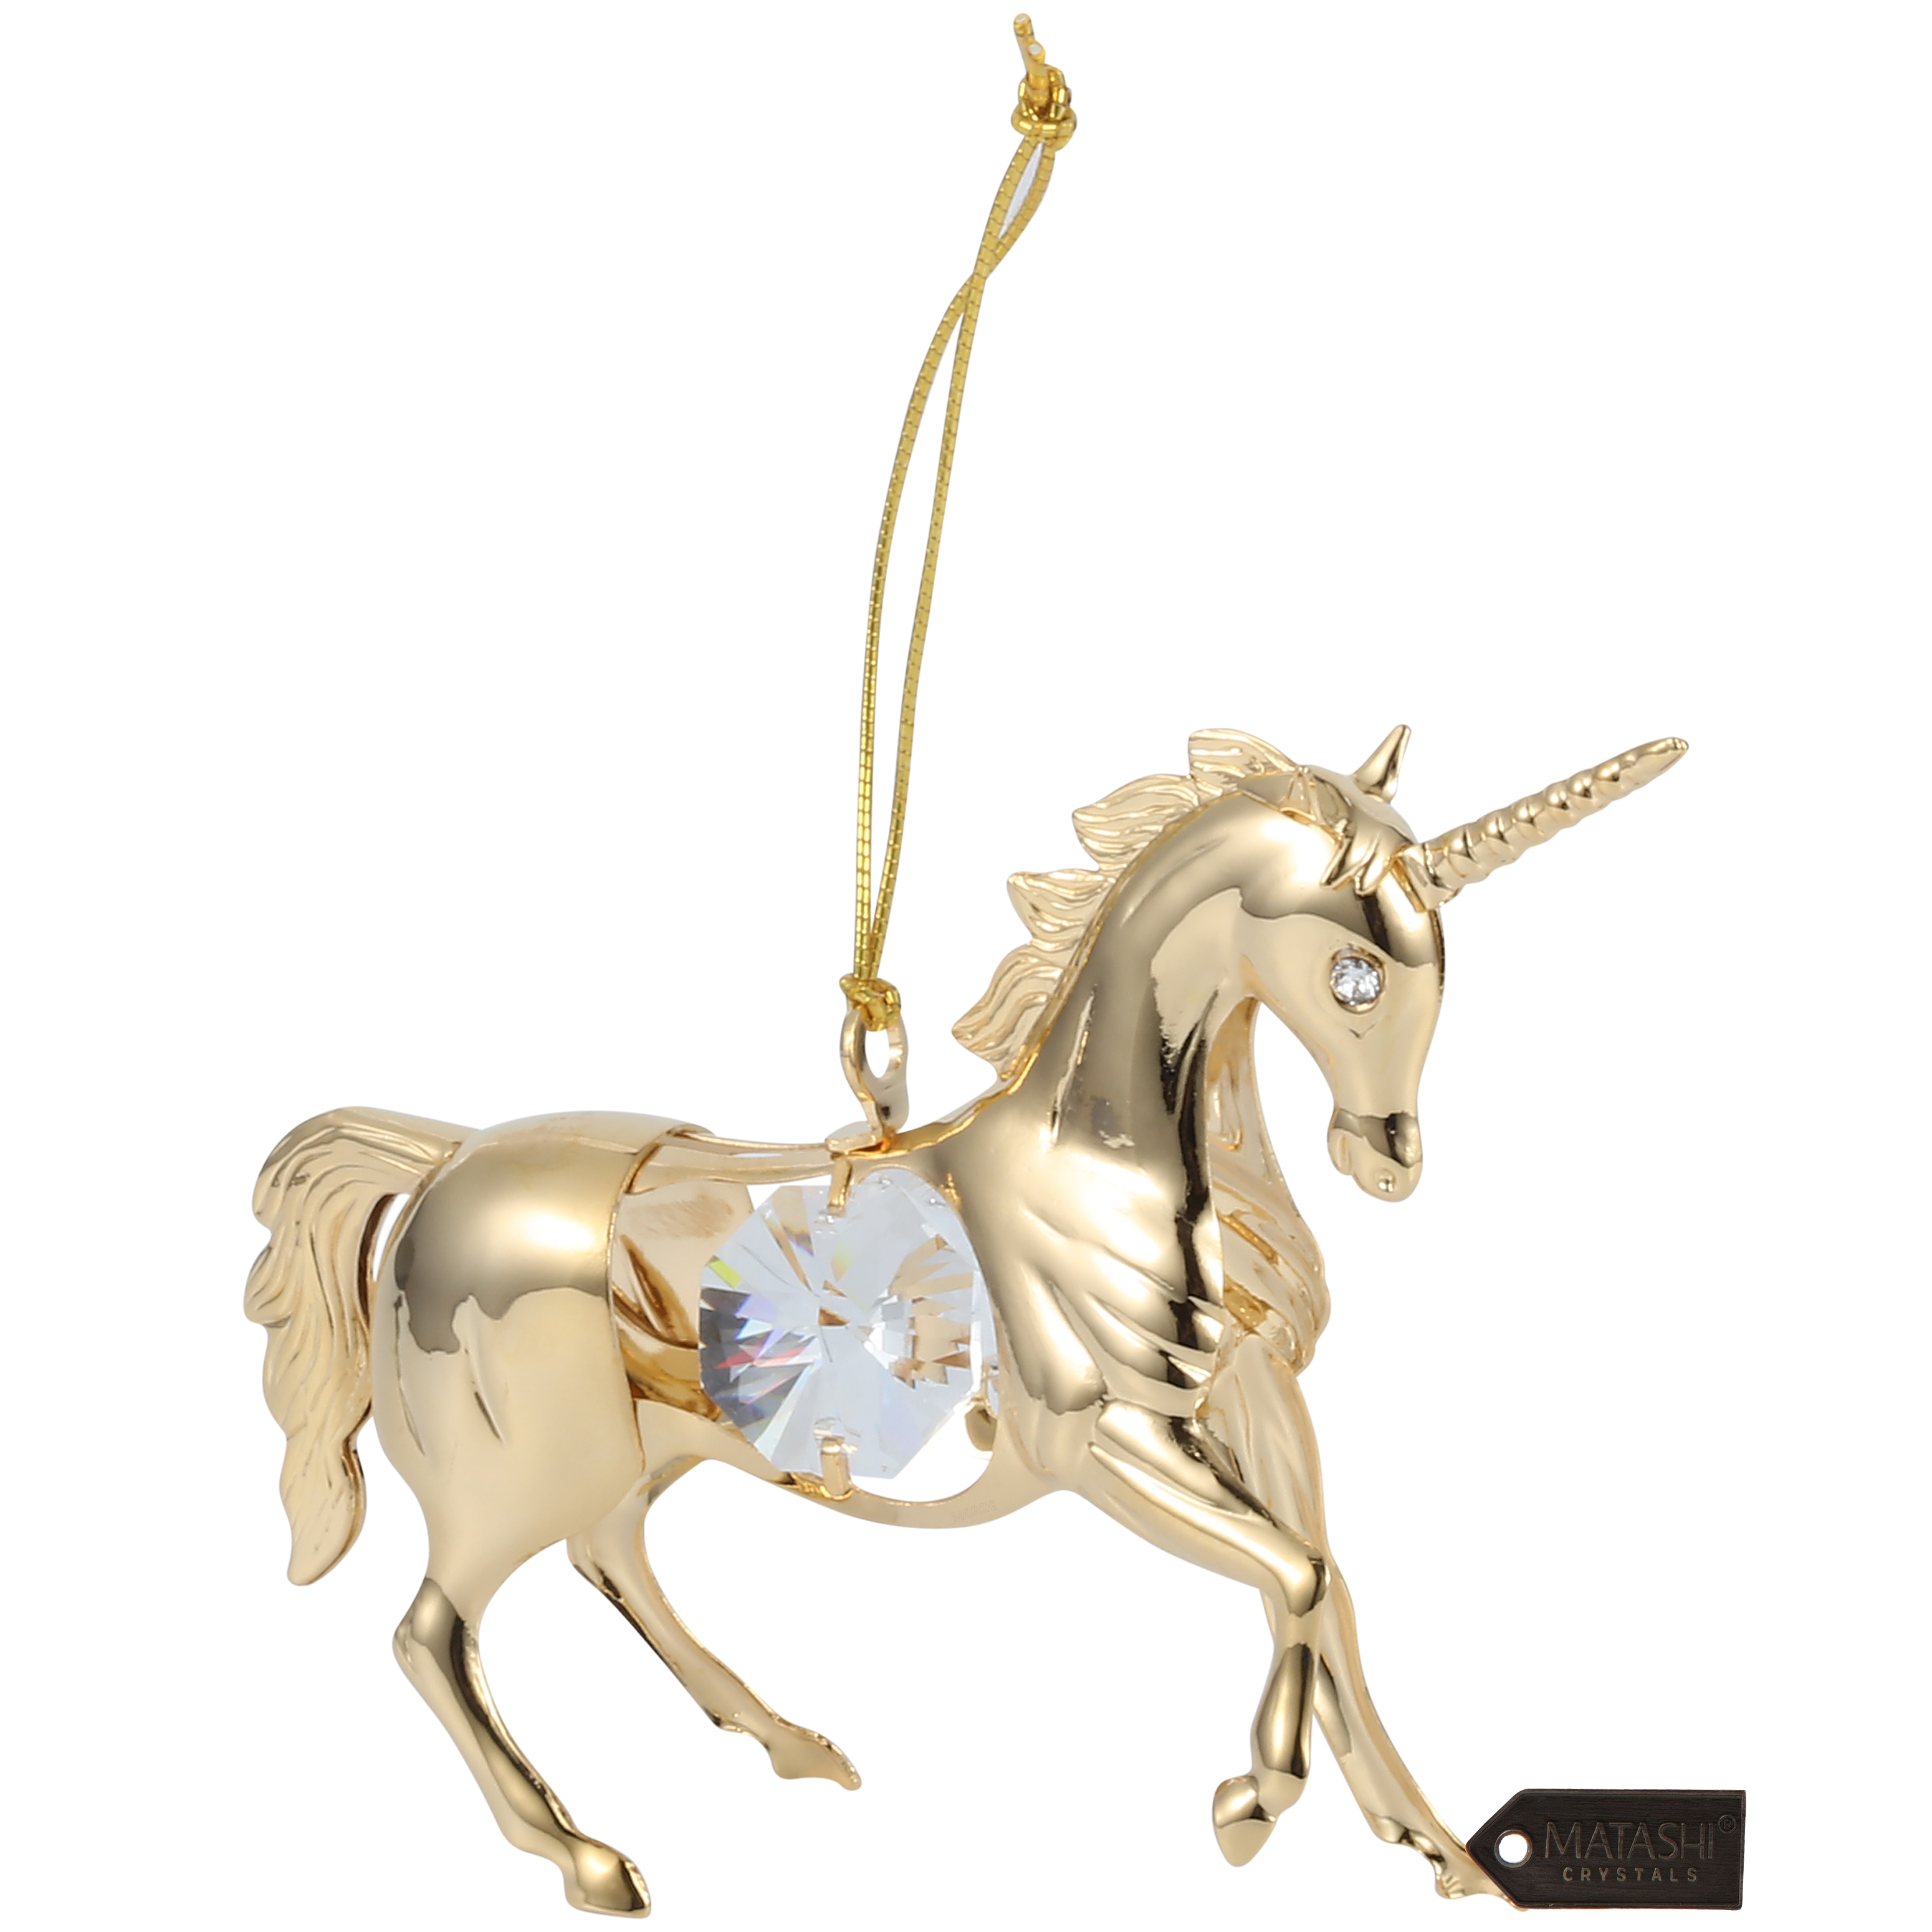 Matashi 24K Gold Plated Crystal Studded Unicorn Ornament